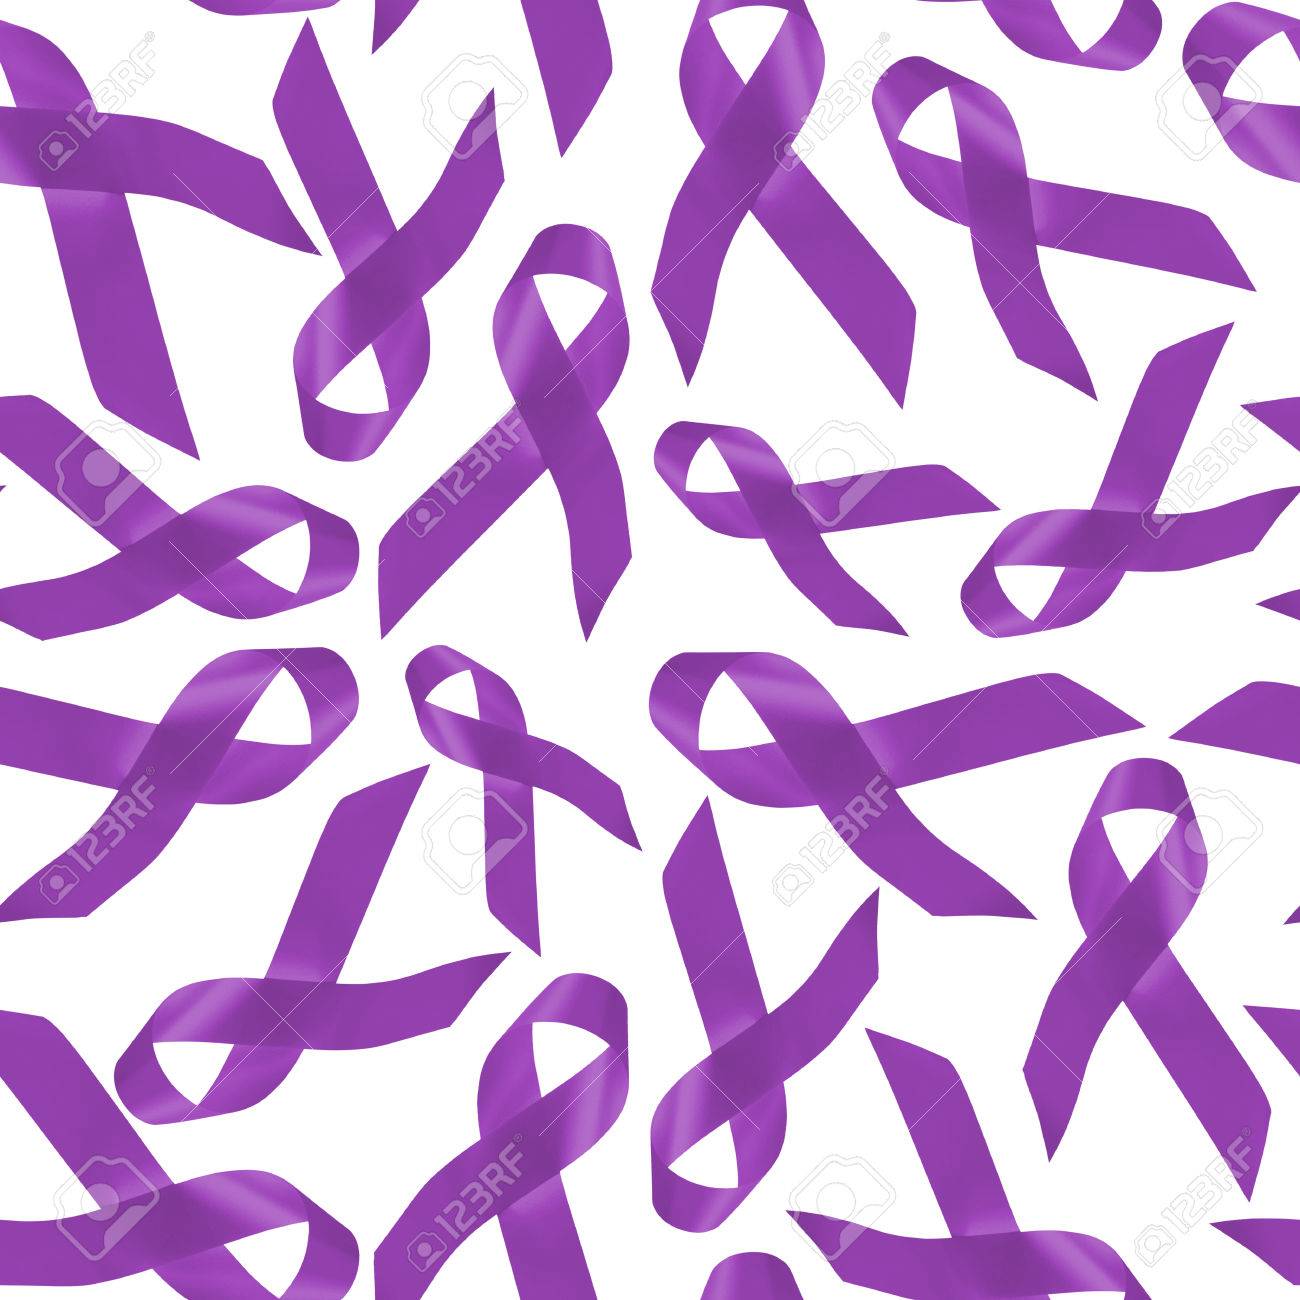 Pancreatic Cancer Awareness Background Seamless Pattern Made